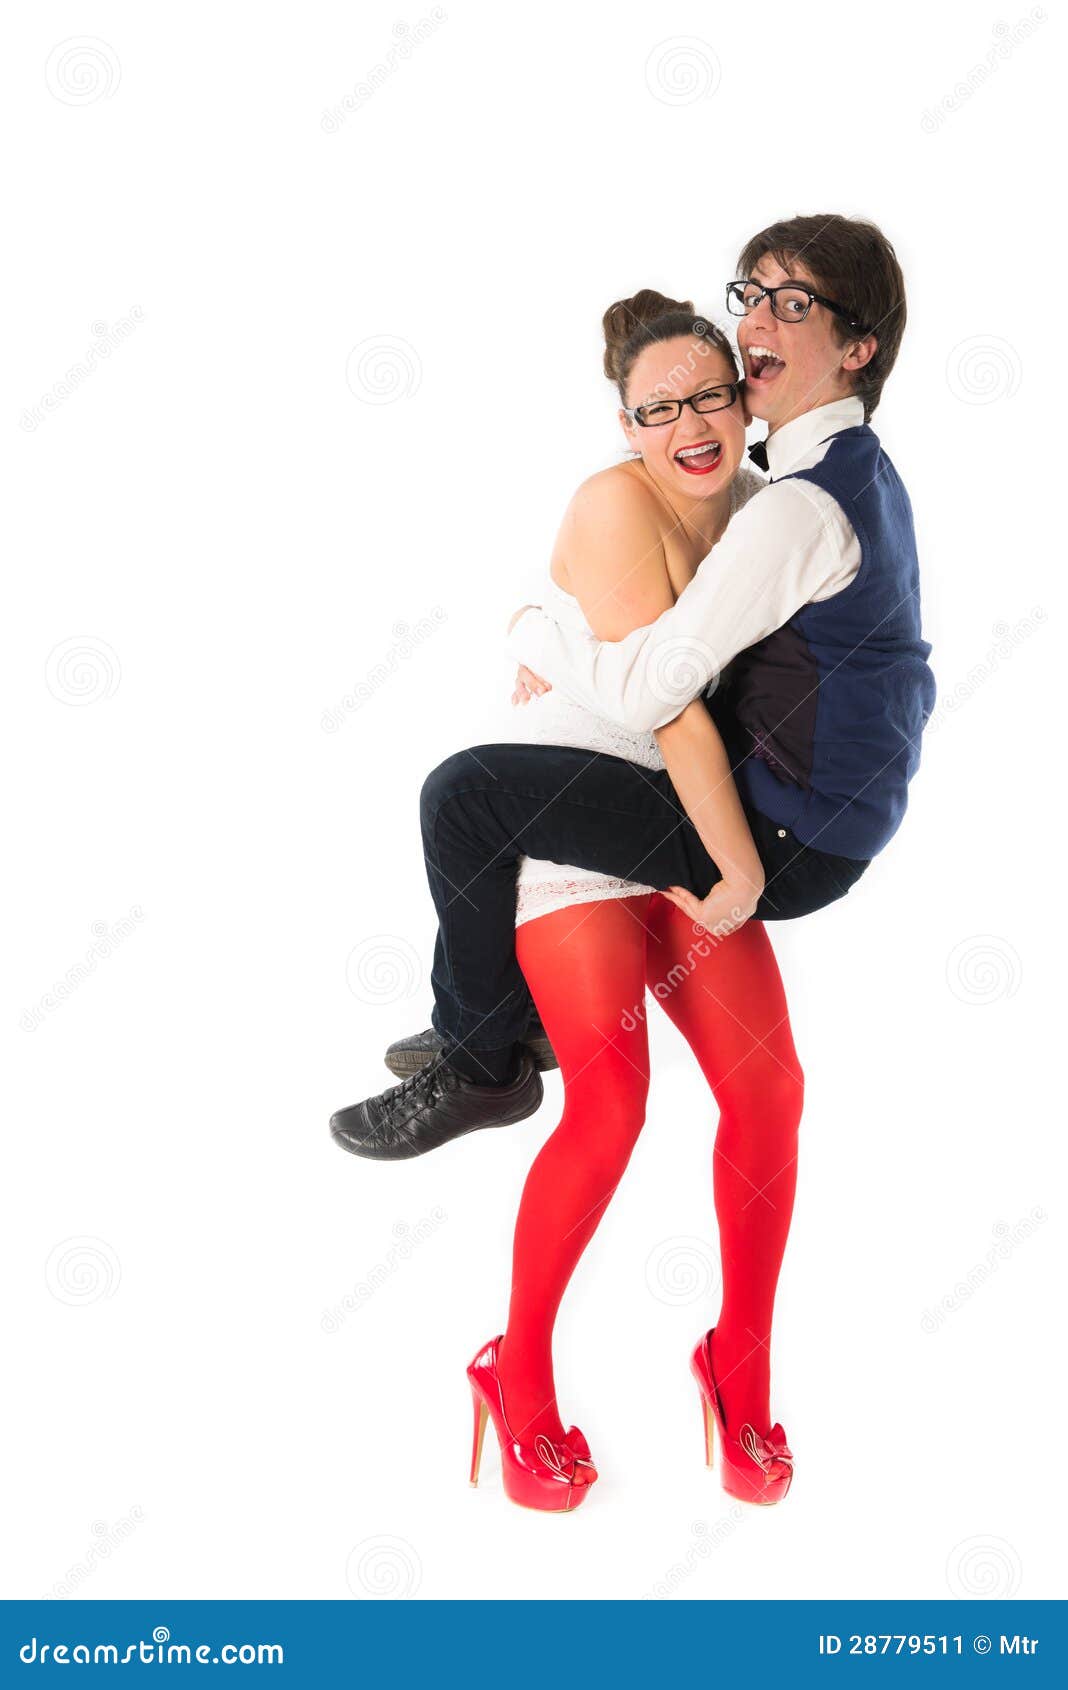 Funny romantic couple stock image. Image of humor, couple - 28779511